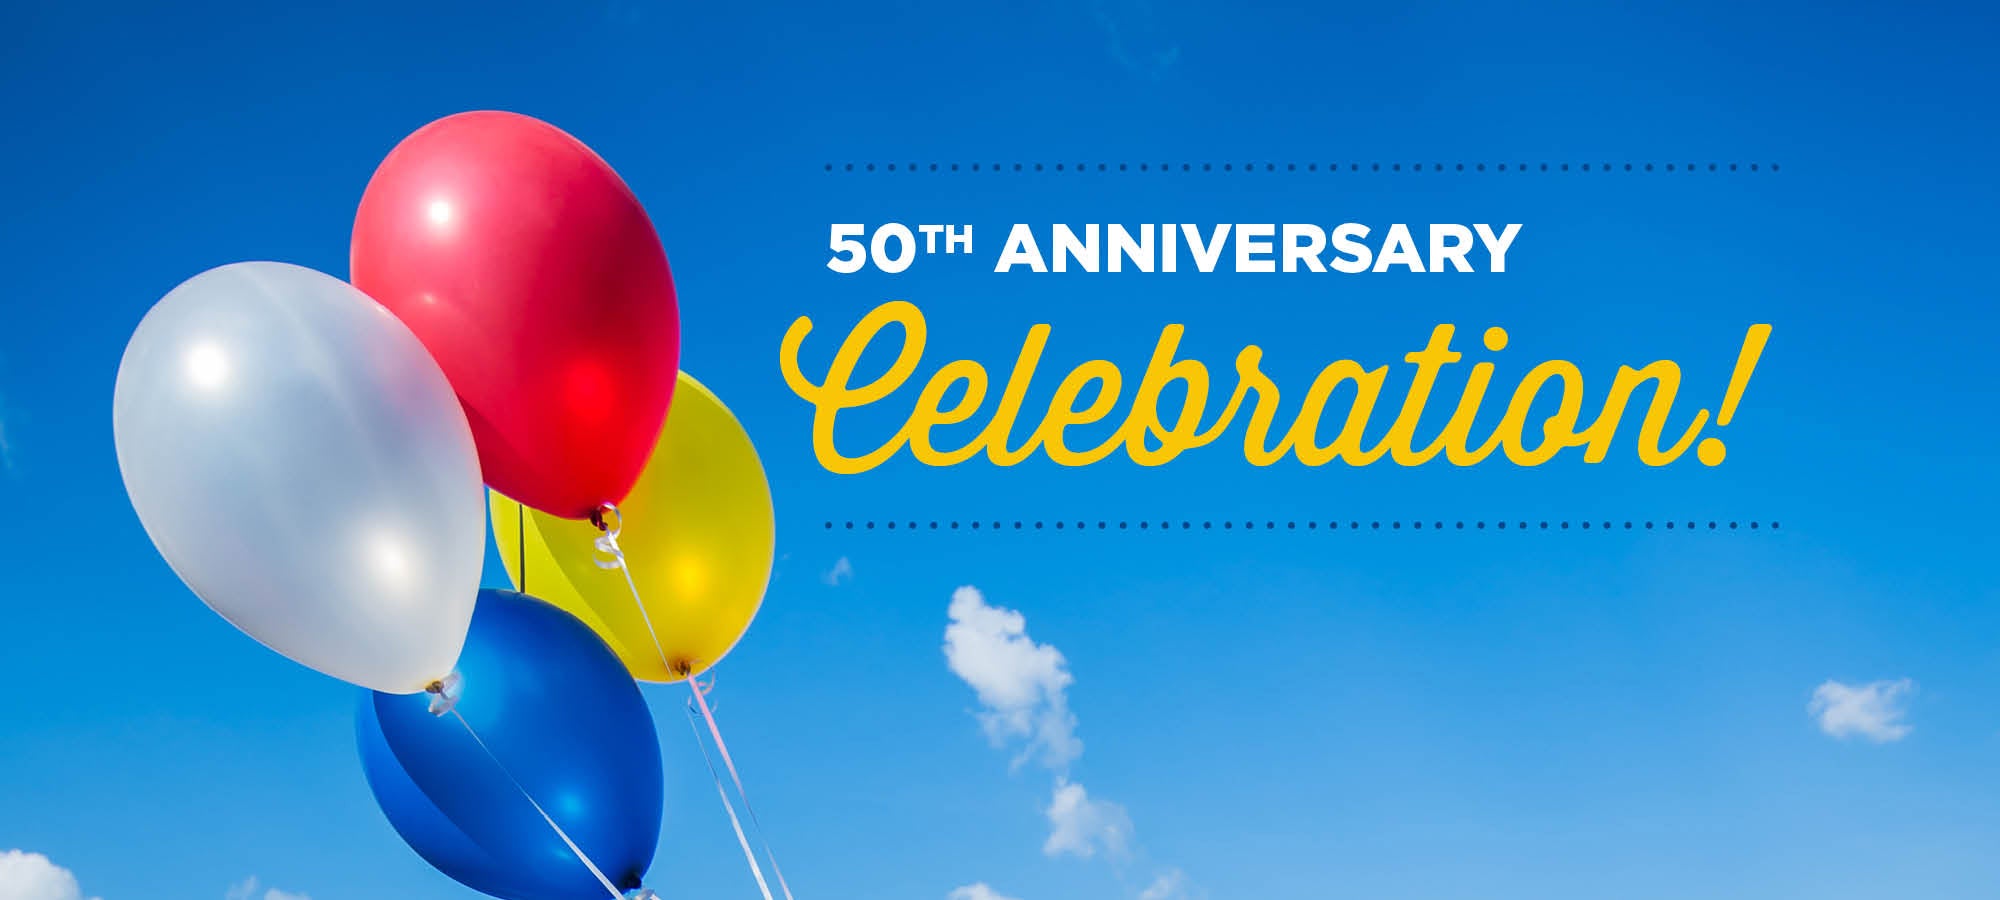 50th anniversary ballons